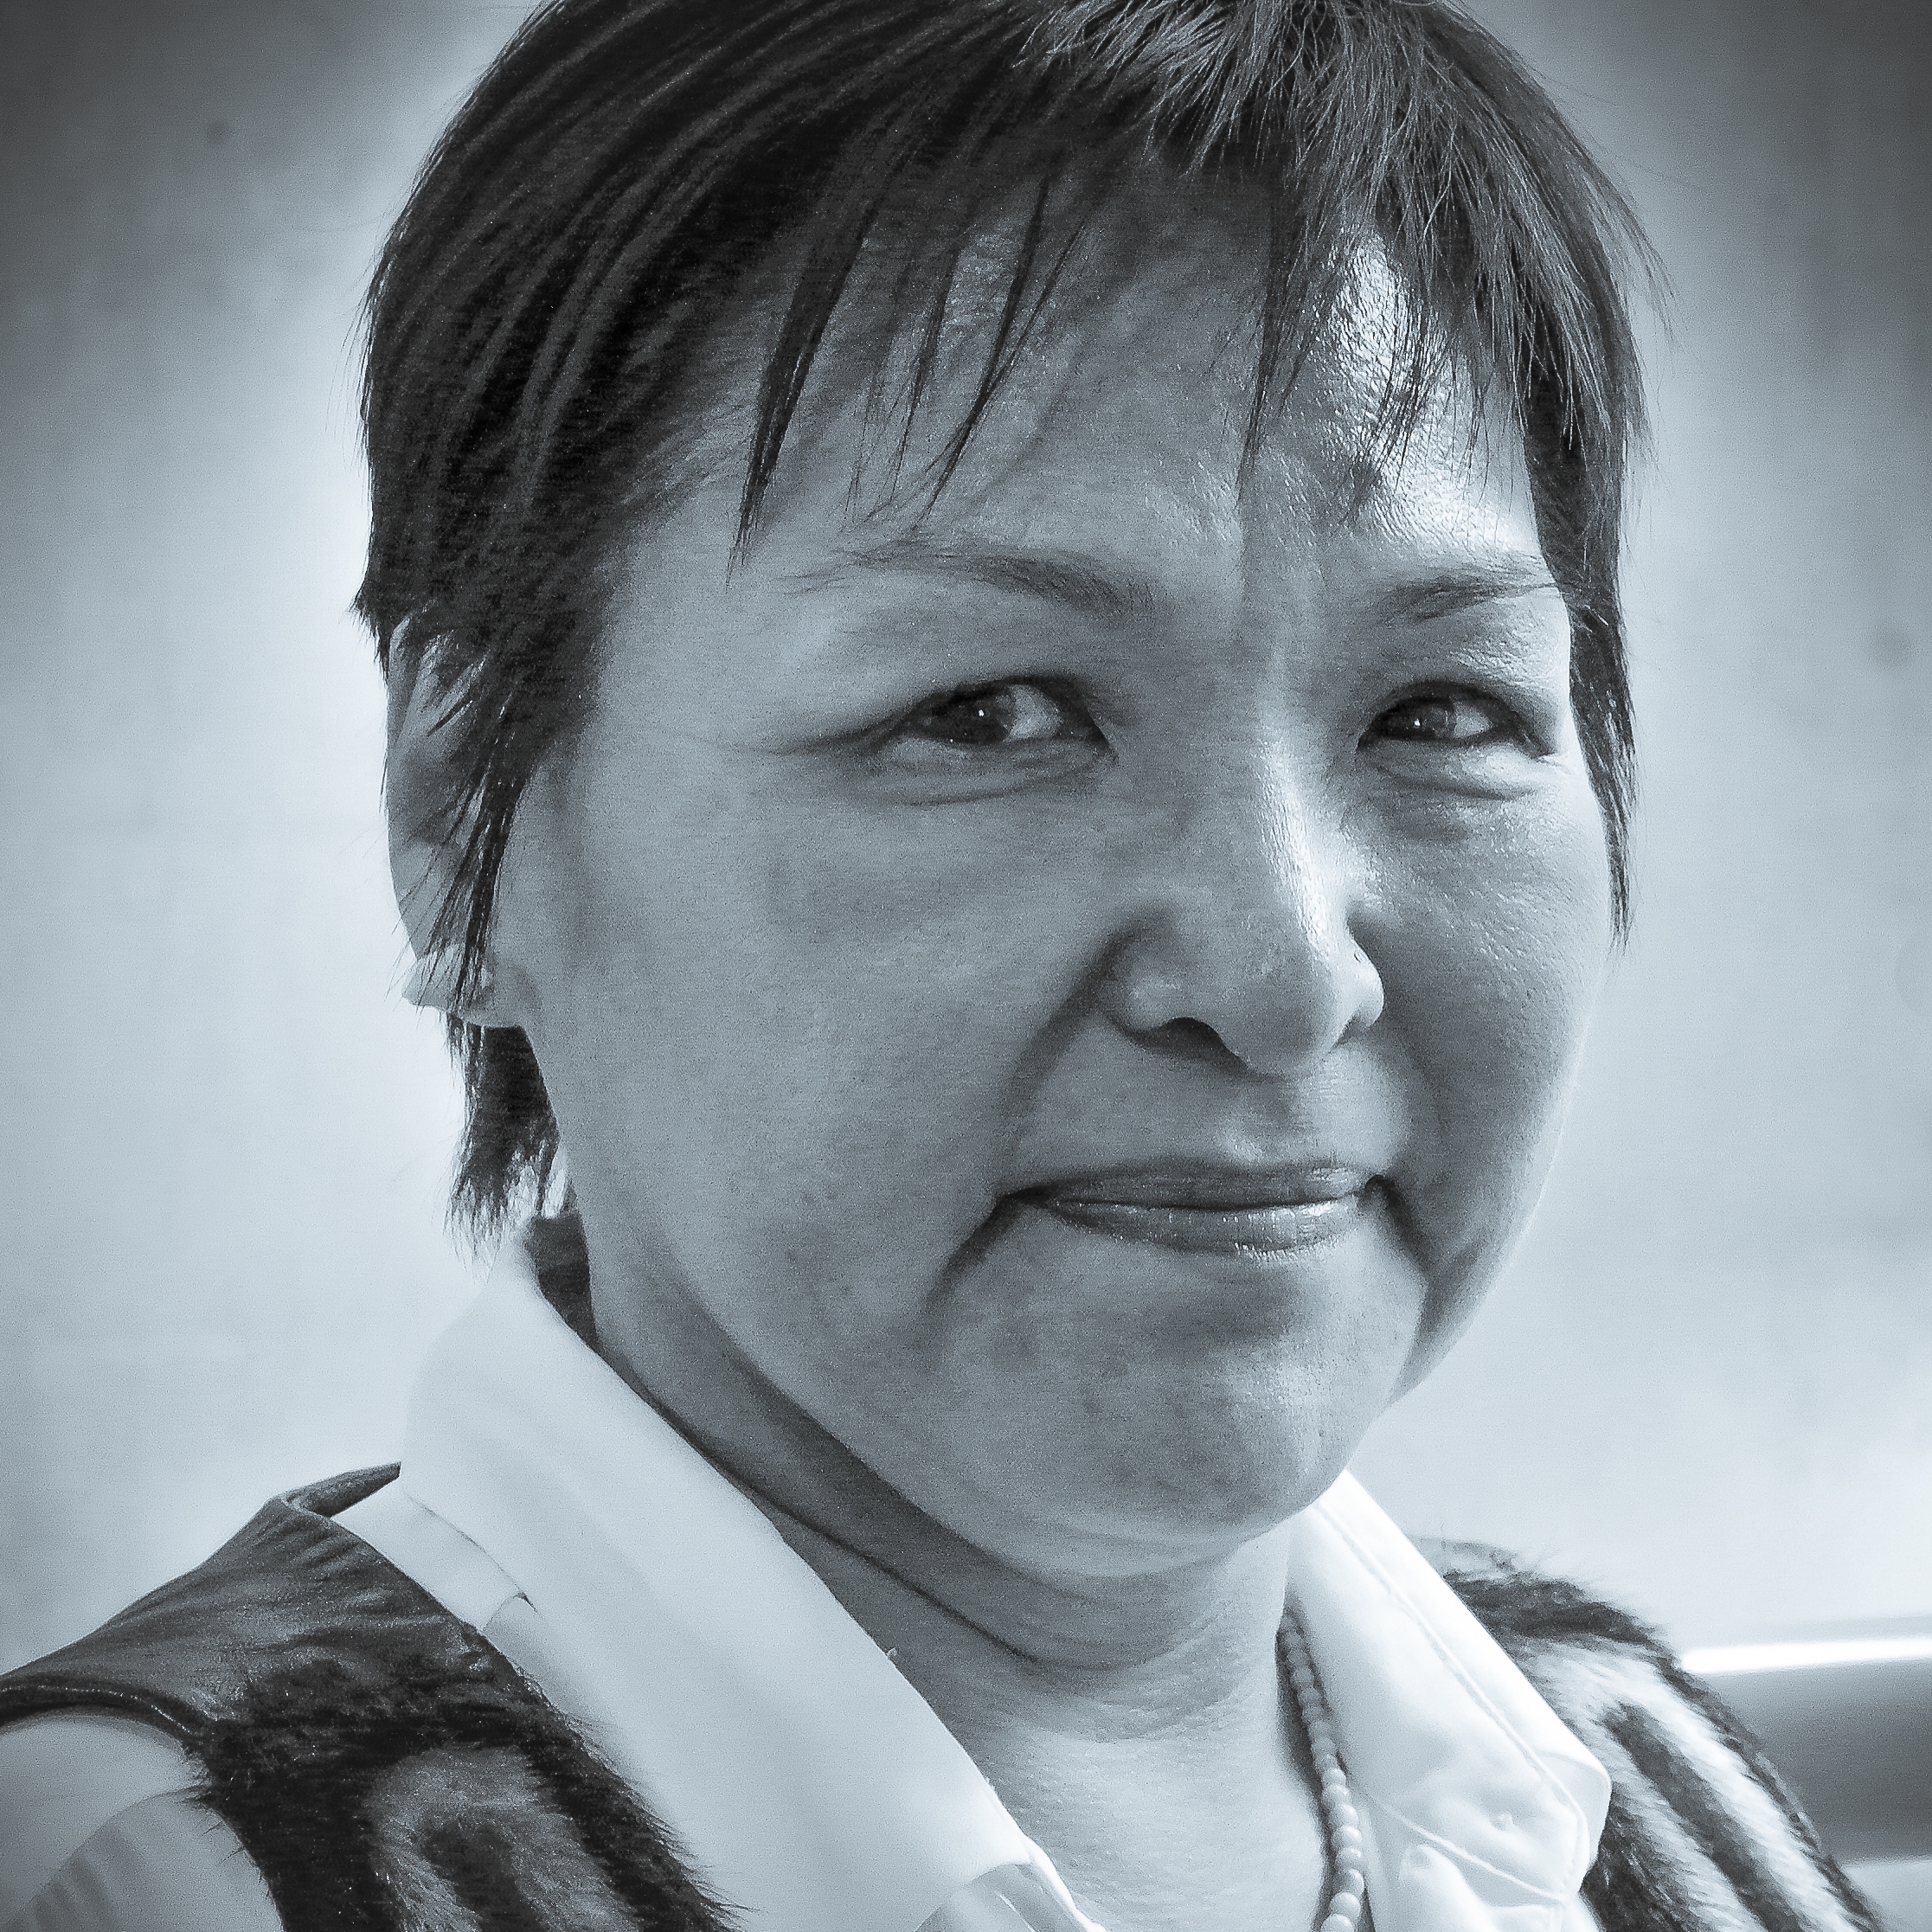 Okalik Eegeesiak#Former Chairman of the ICC, Inuit Circumpolar Council.